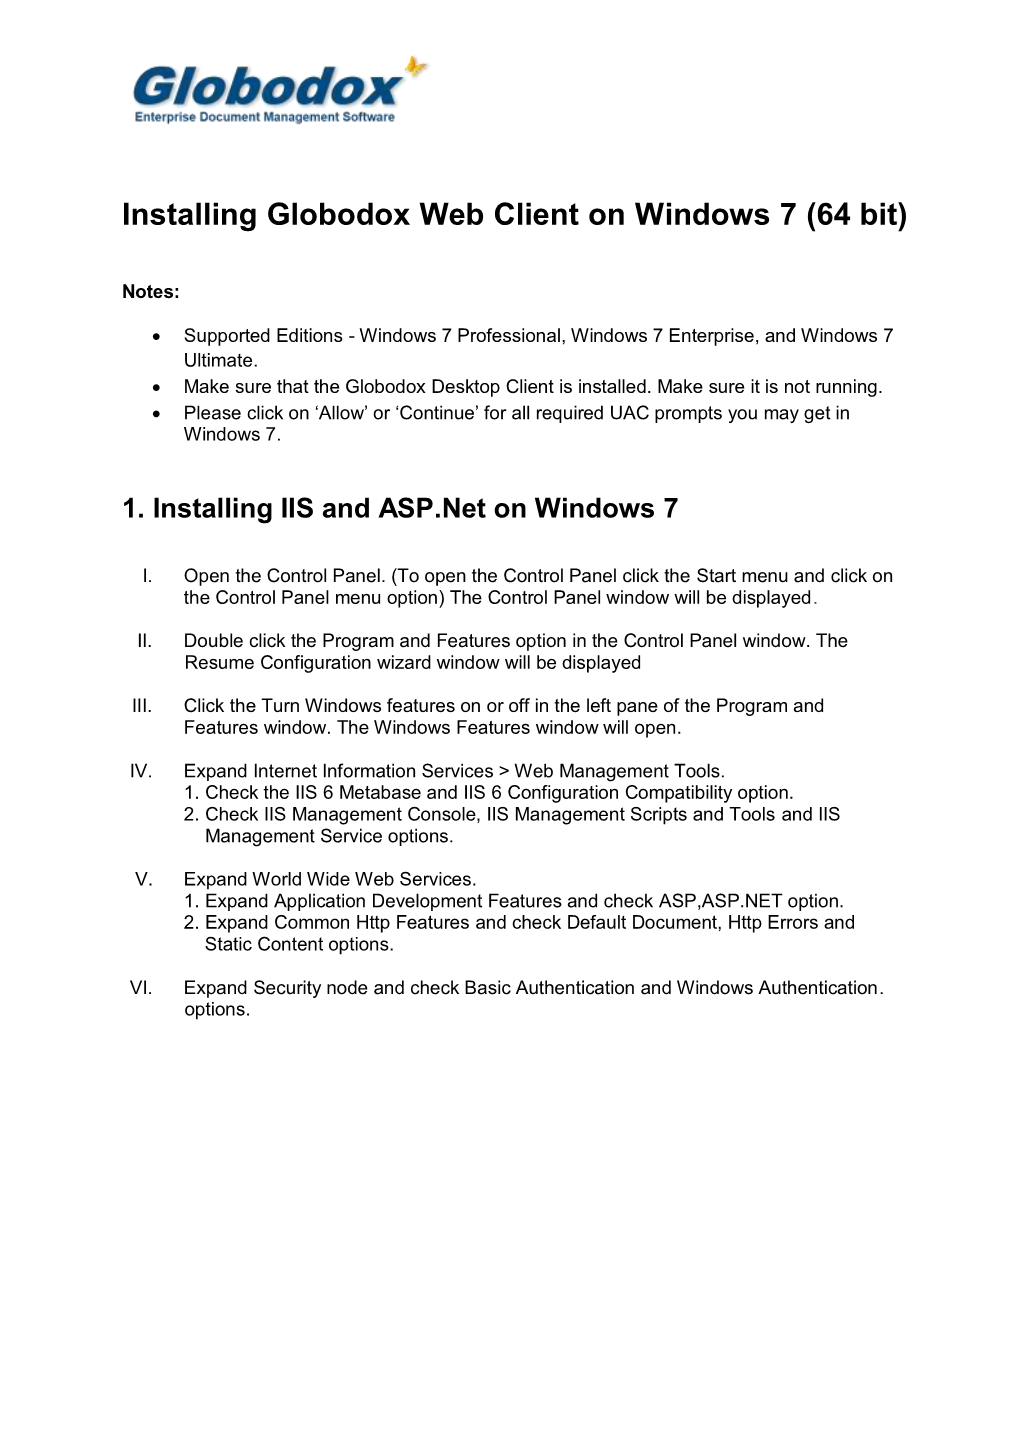 Installing Globodox Web Client on Windows 7 (64 Bit)